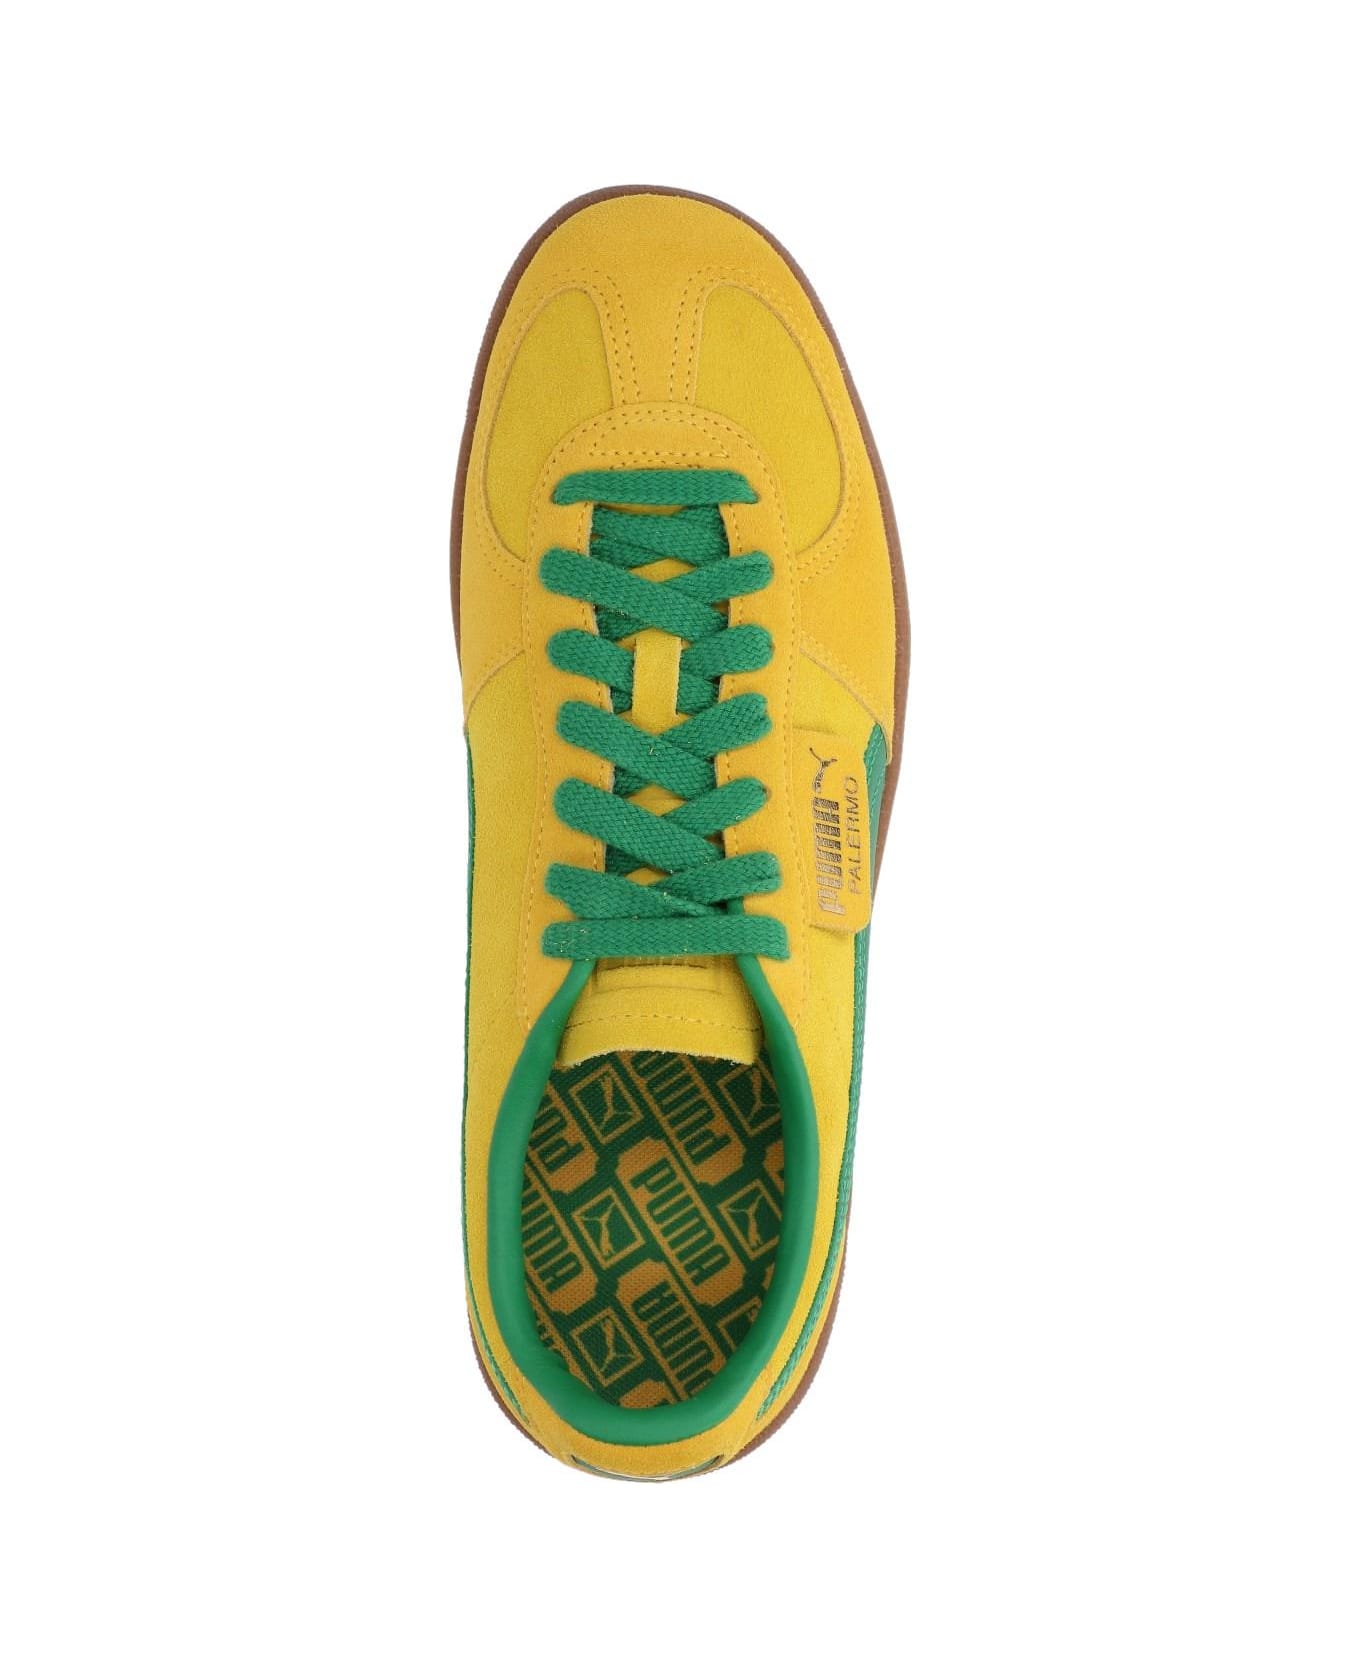 Puma 'palermo' Sneakers - Yellow